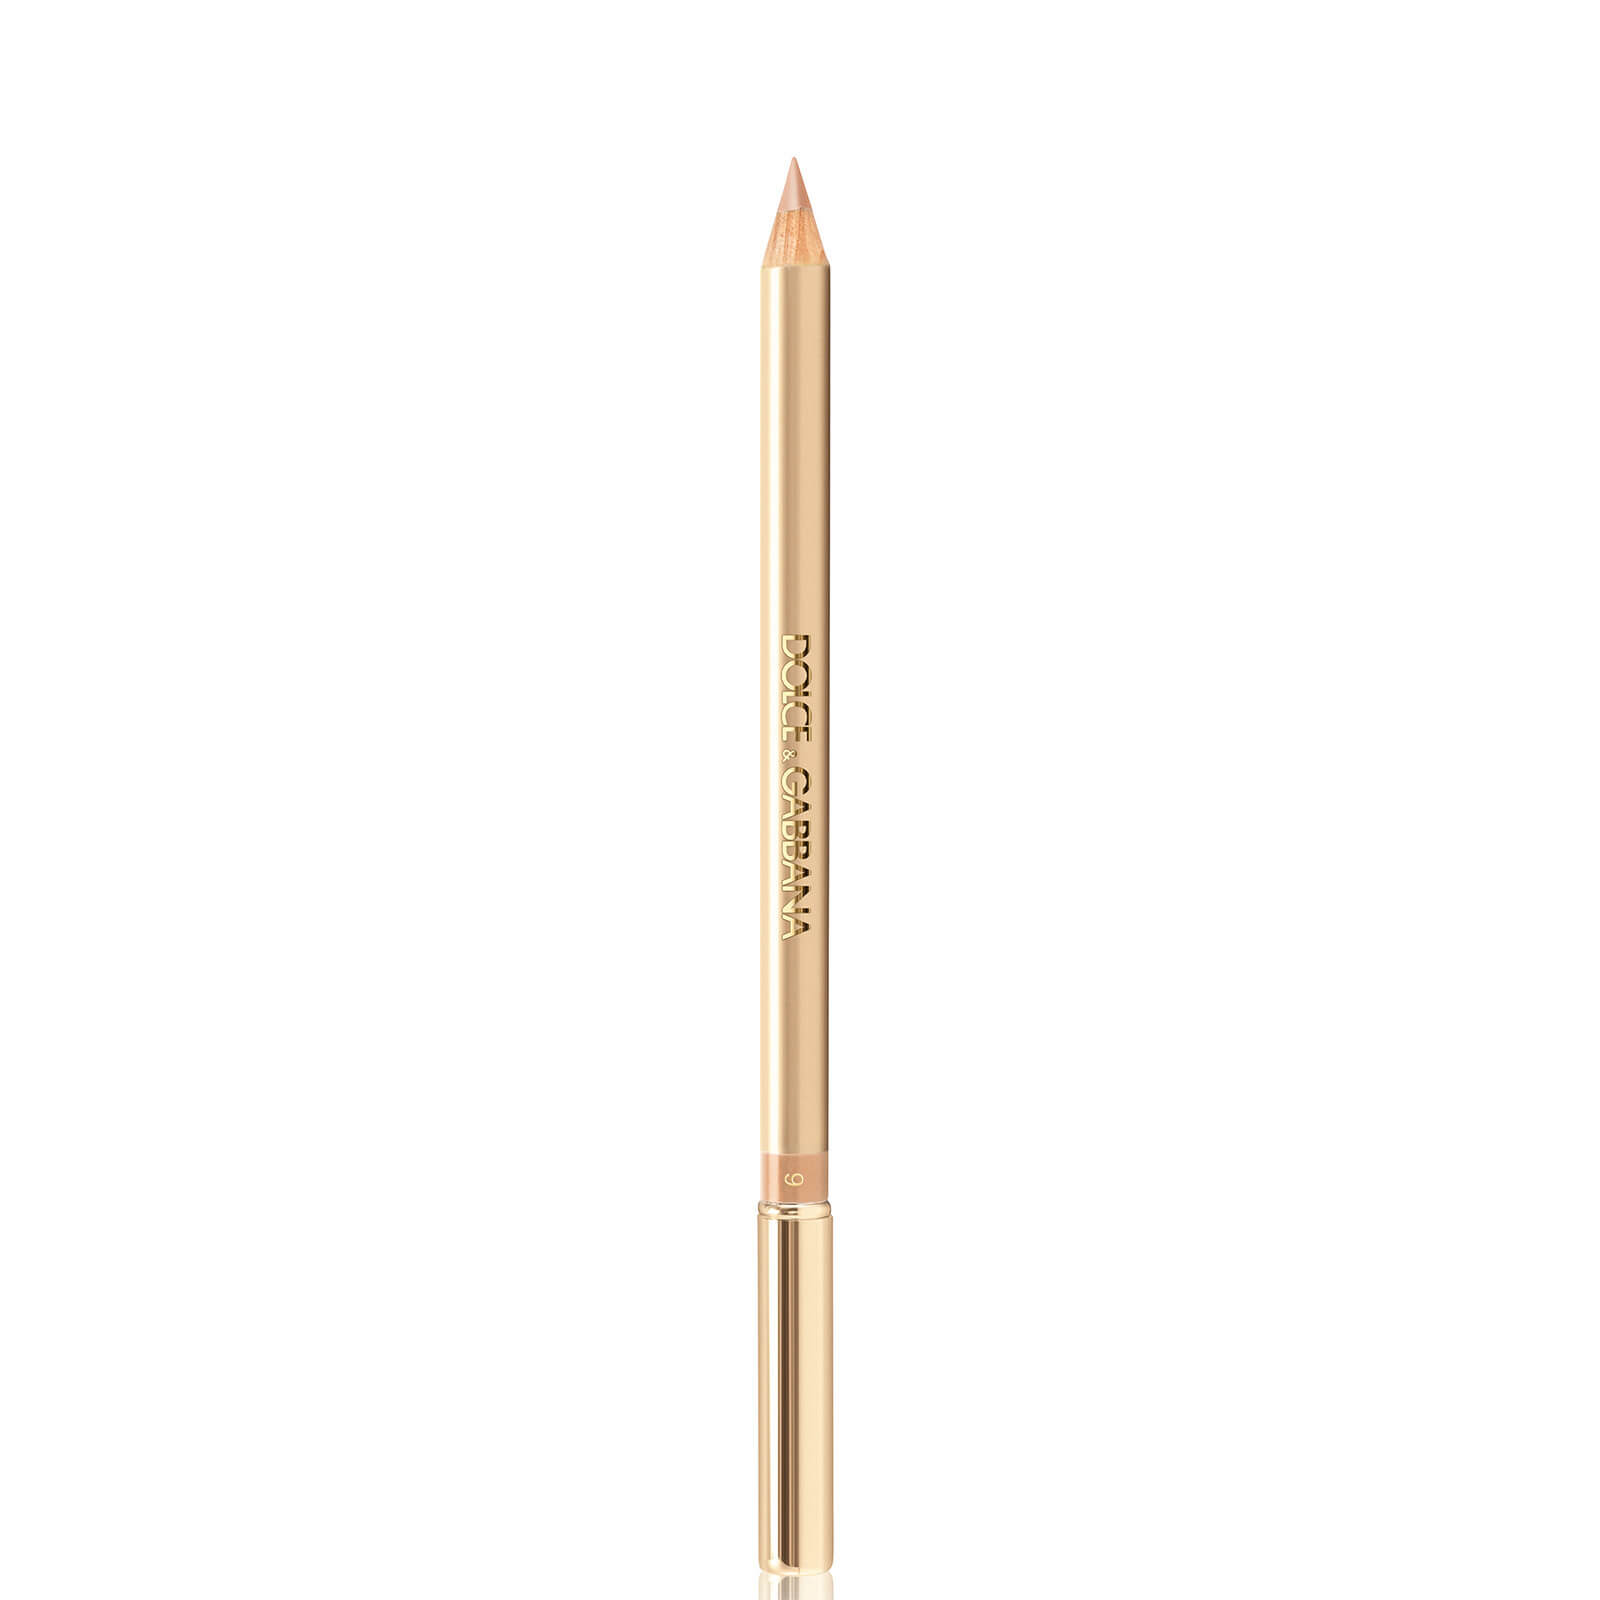 Dolce&Gabbana Eyeliner Pencil 1.55g (Various Shades) - 9 Nude